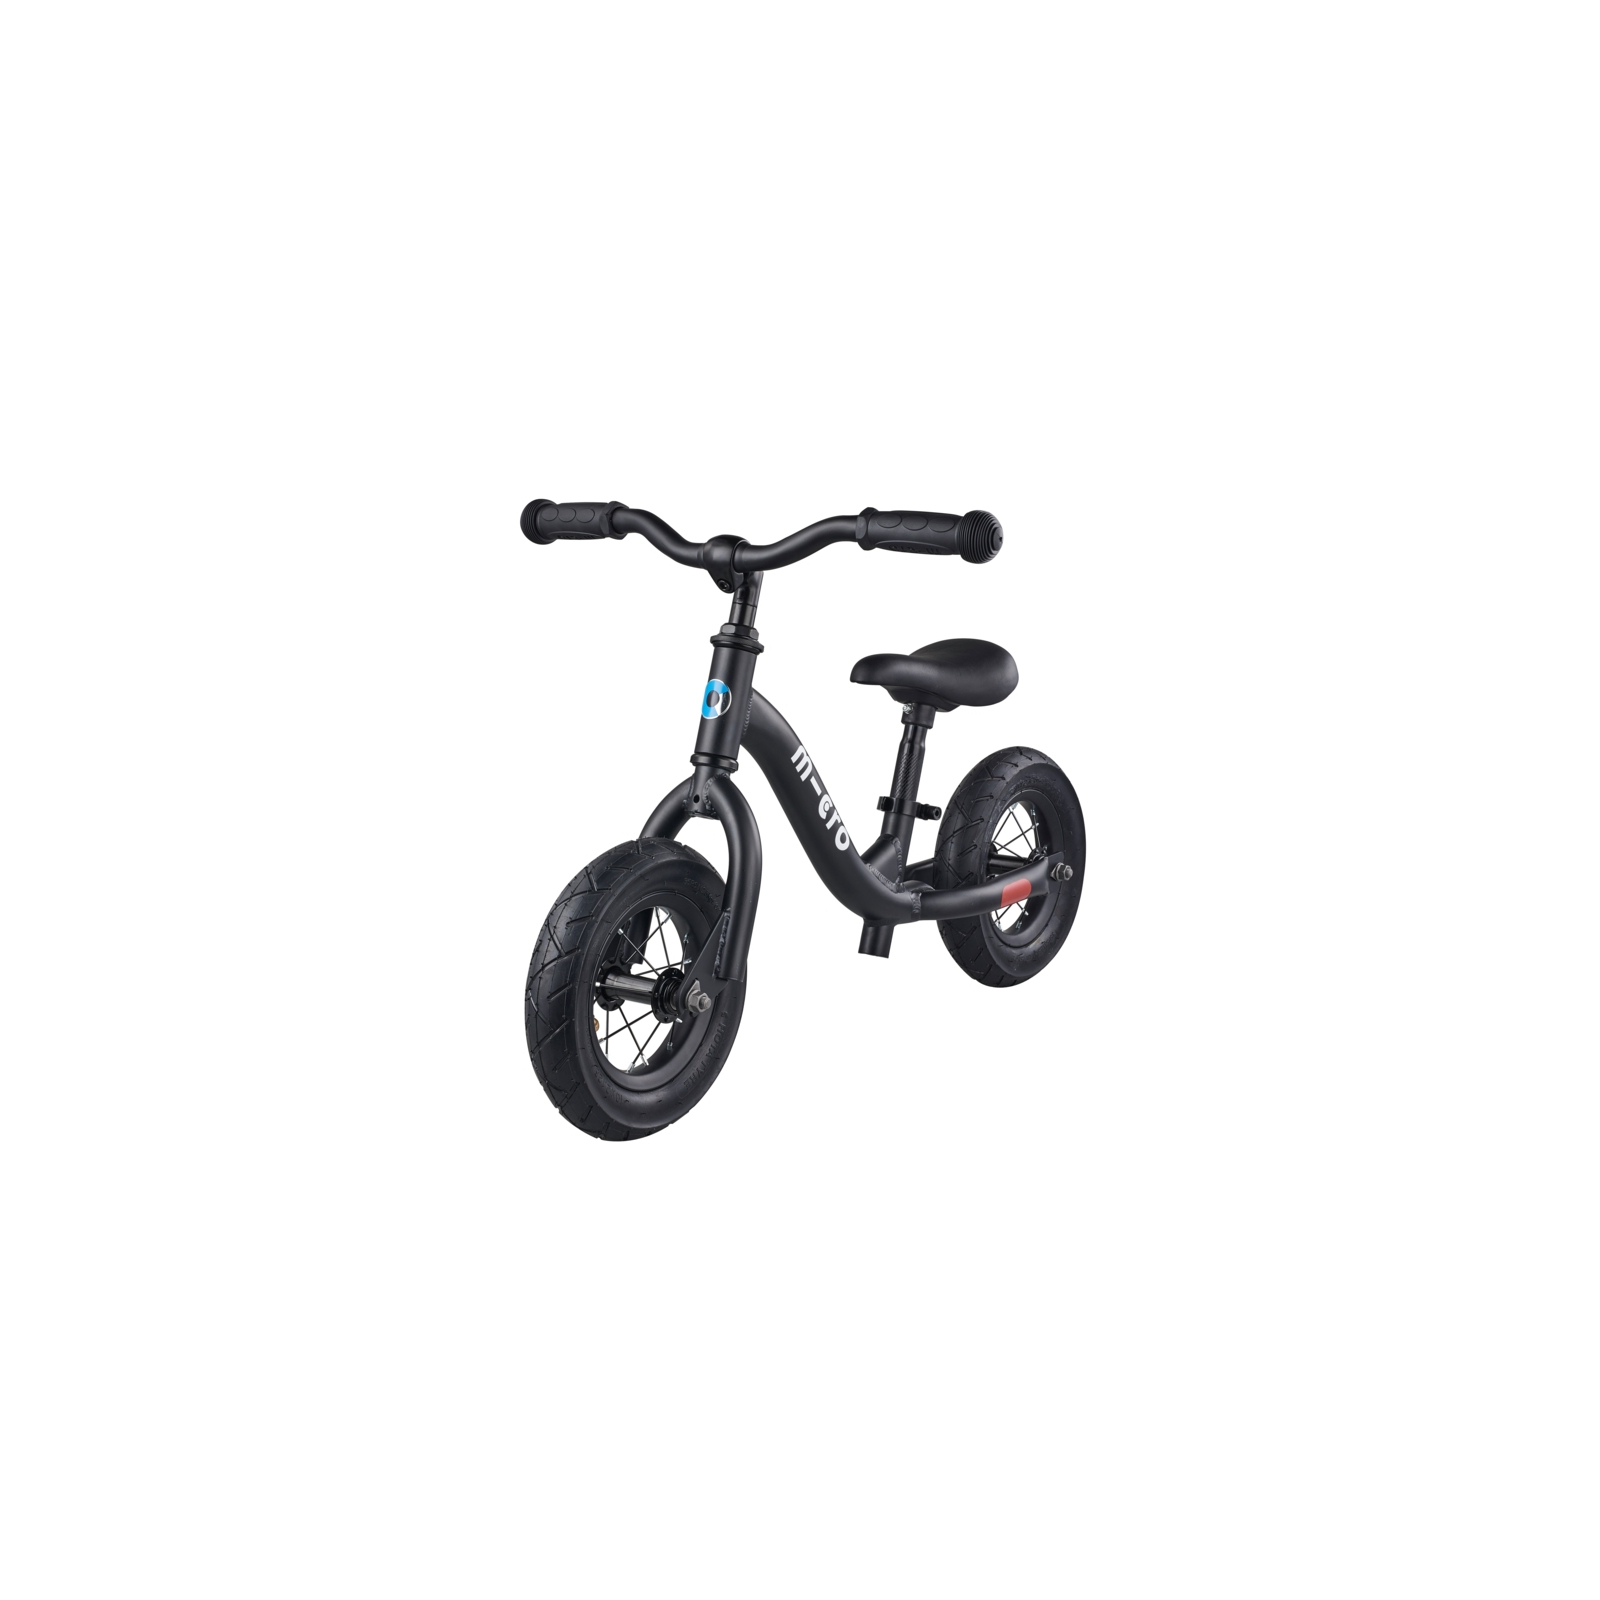 Беговел Micro Balance bike Black (GB0030)